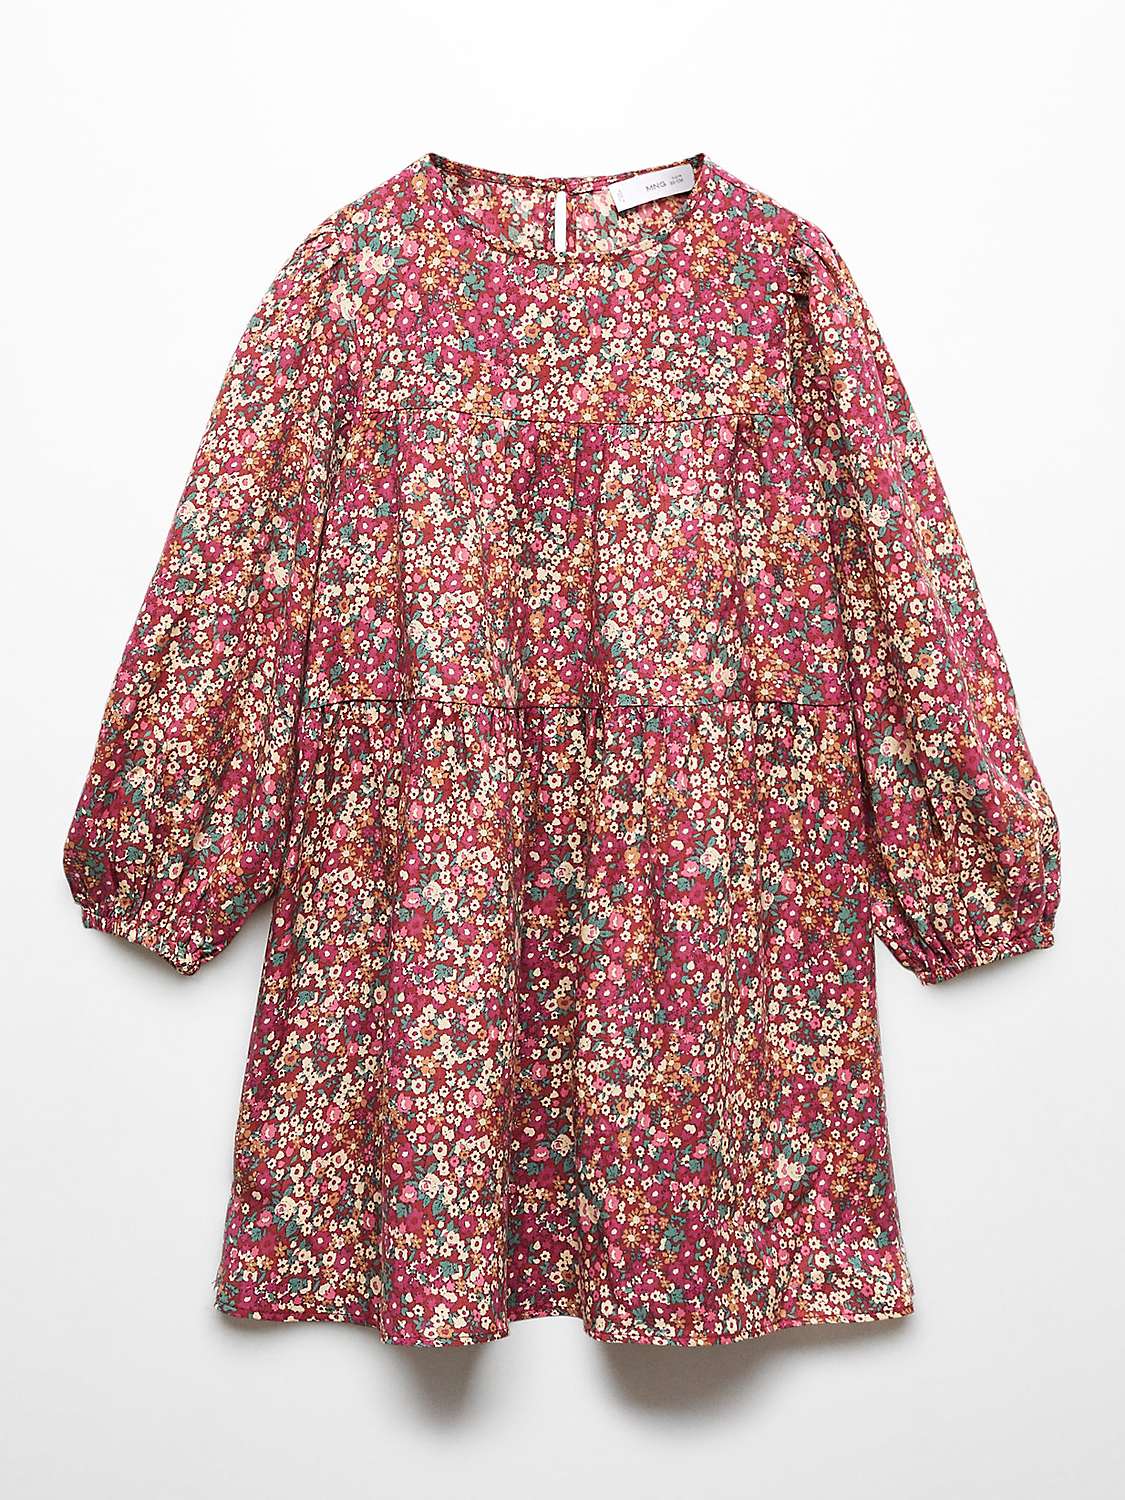 Buy Mango Kids' Marg Floral Print Dress, Dark Red Online at johnlewis.com